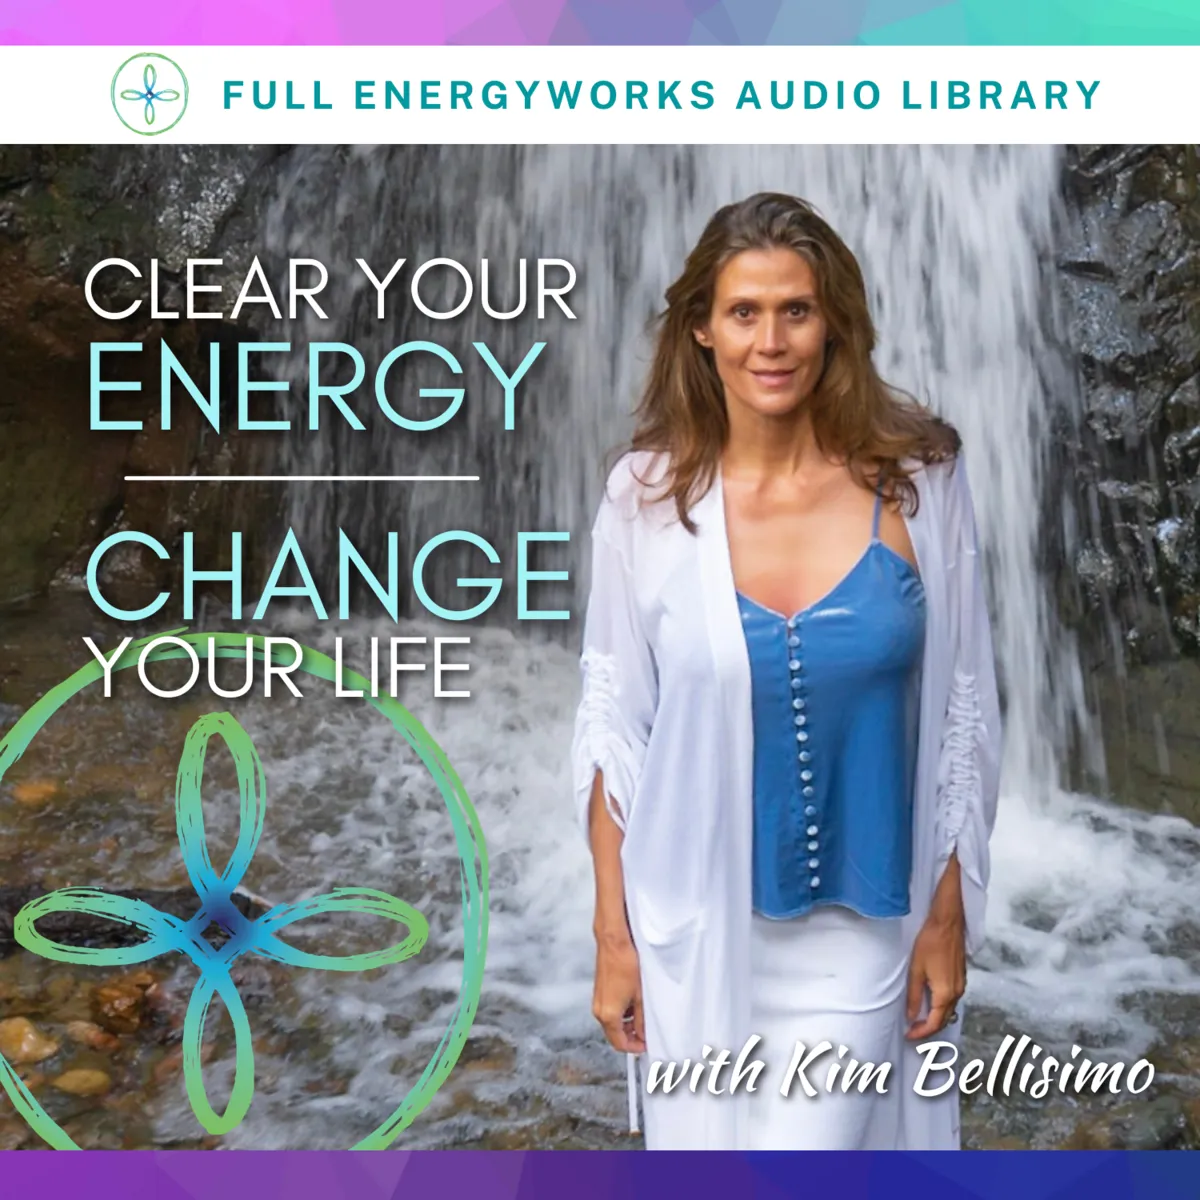 EnergyWorks Audio Library App. Hundreds of Audios